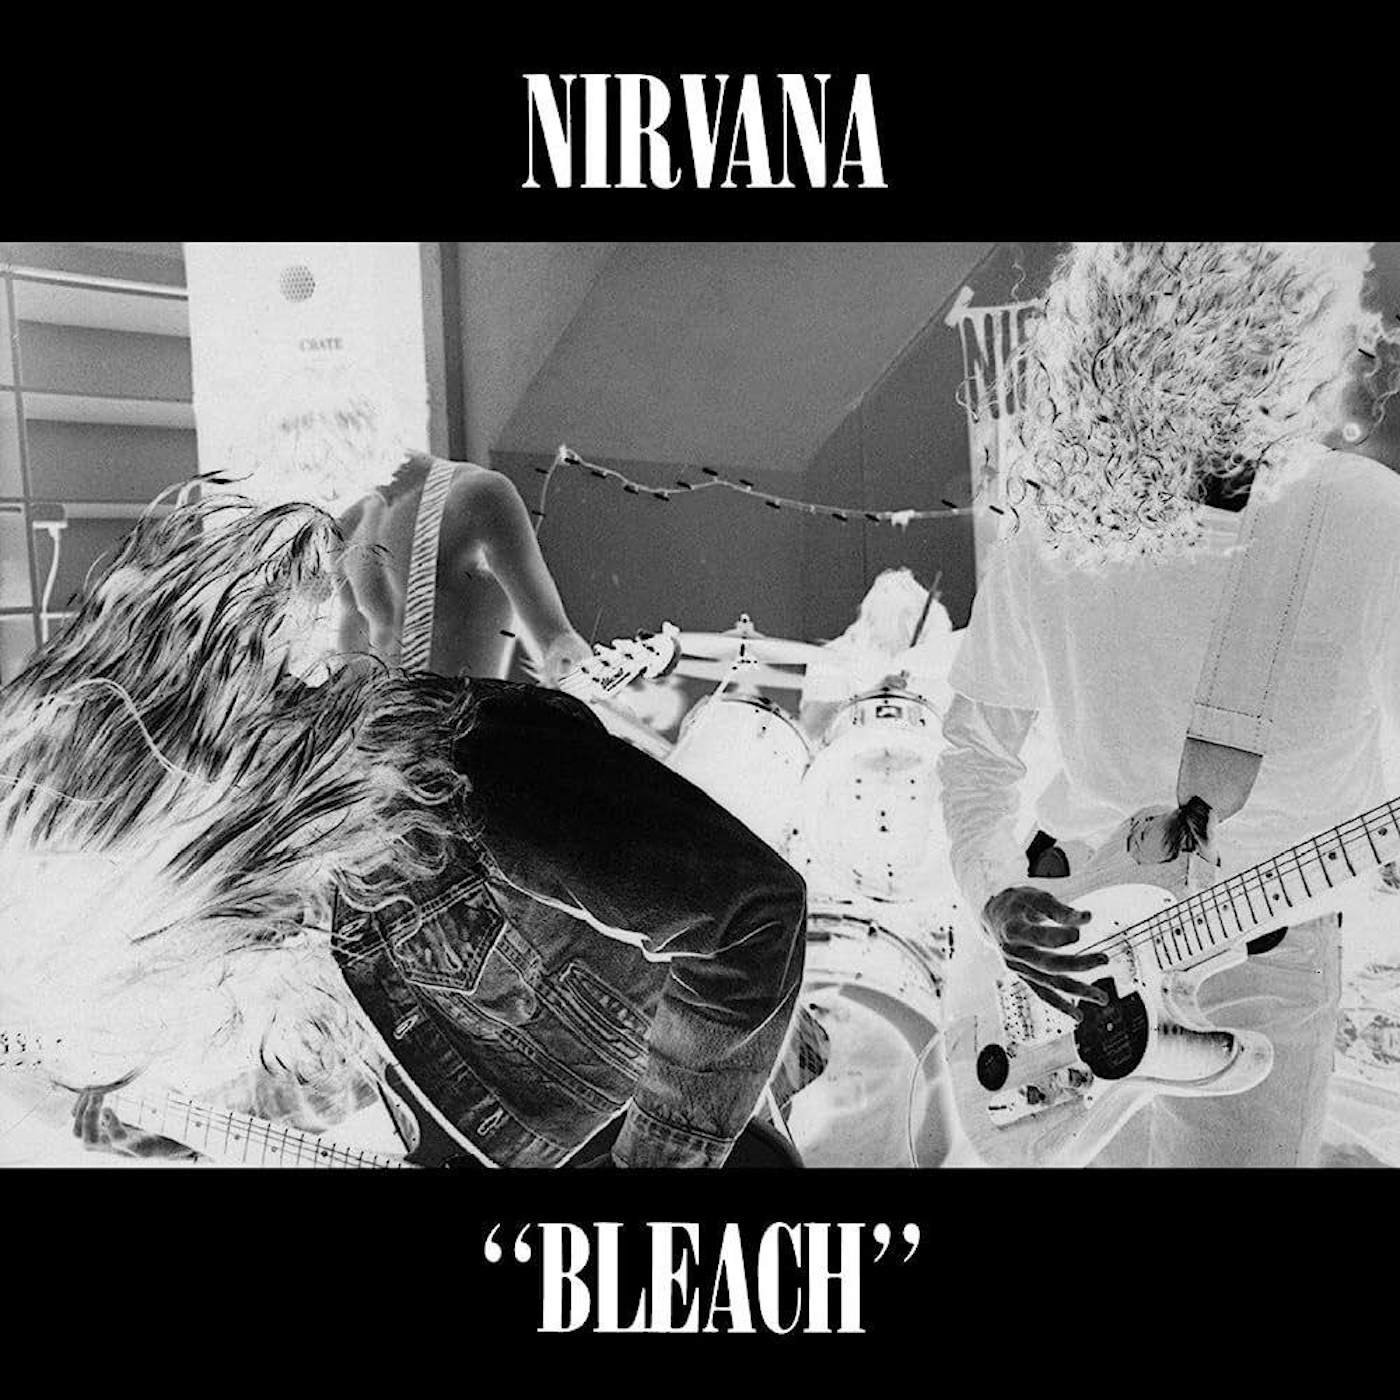 Nirvana Bleach Vinyl Record